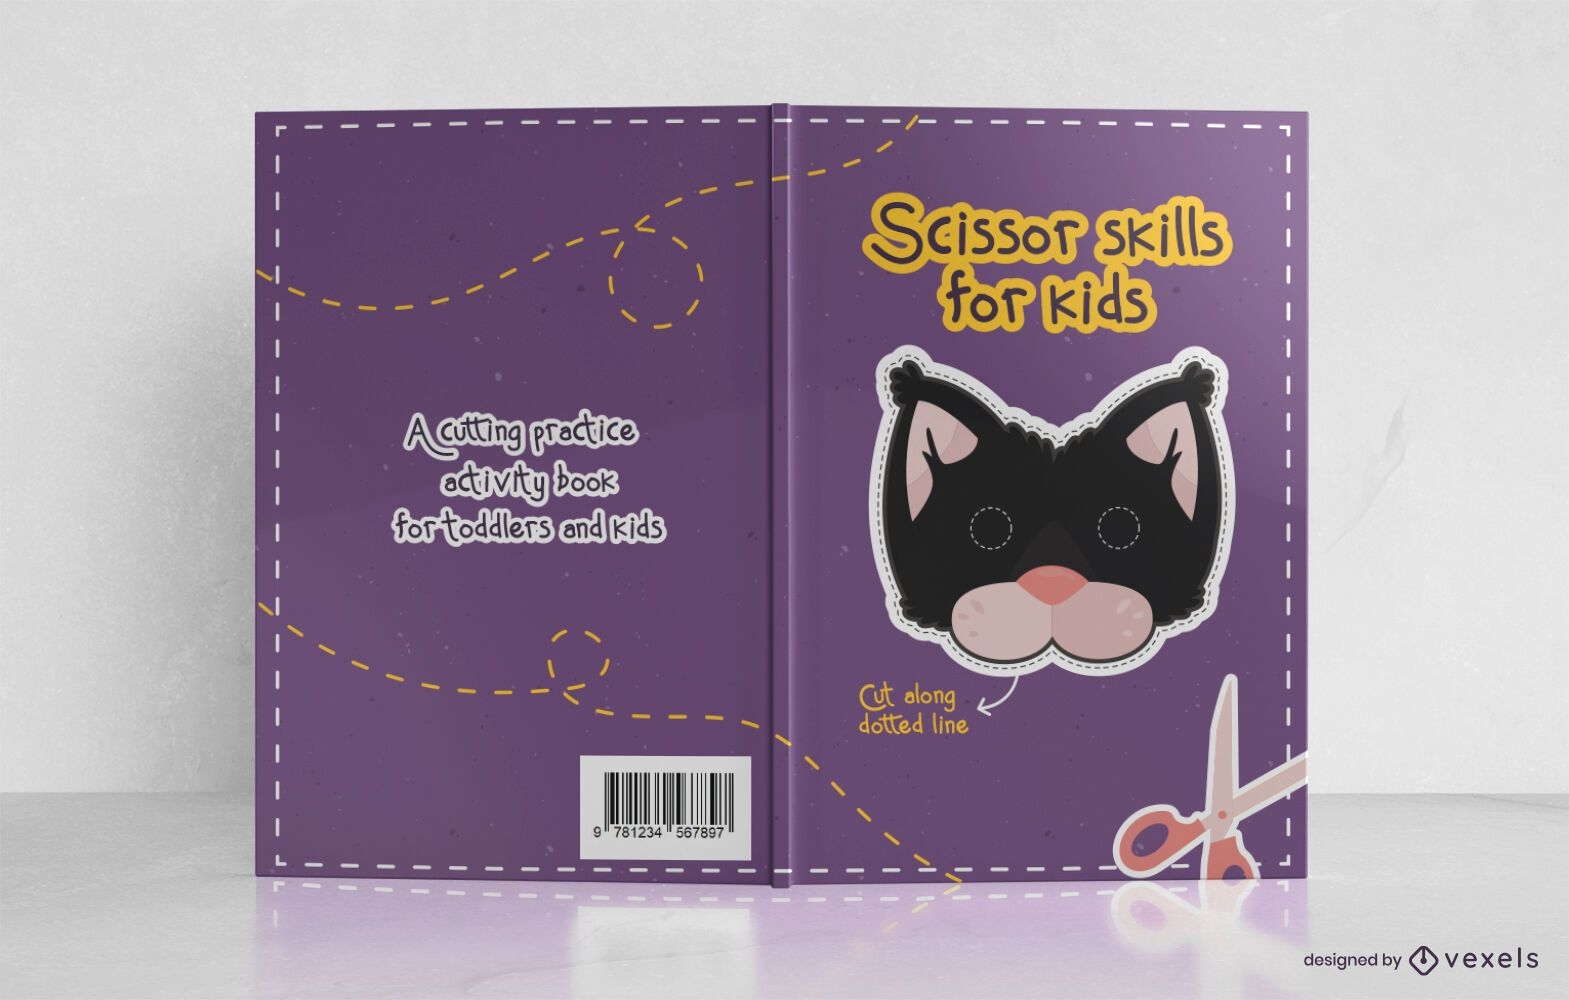 Scissor skills book cover design